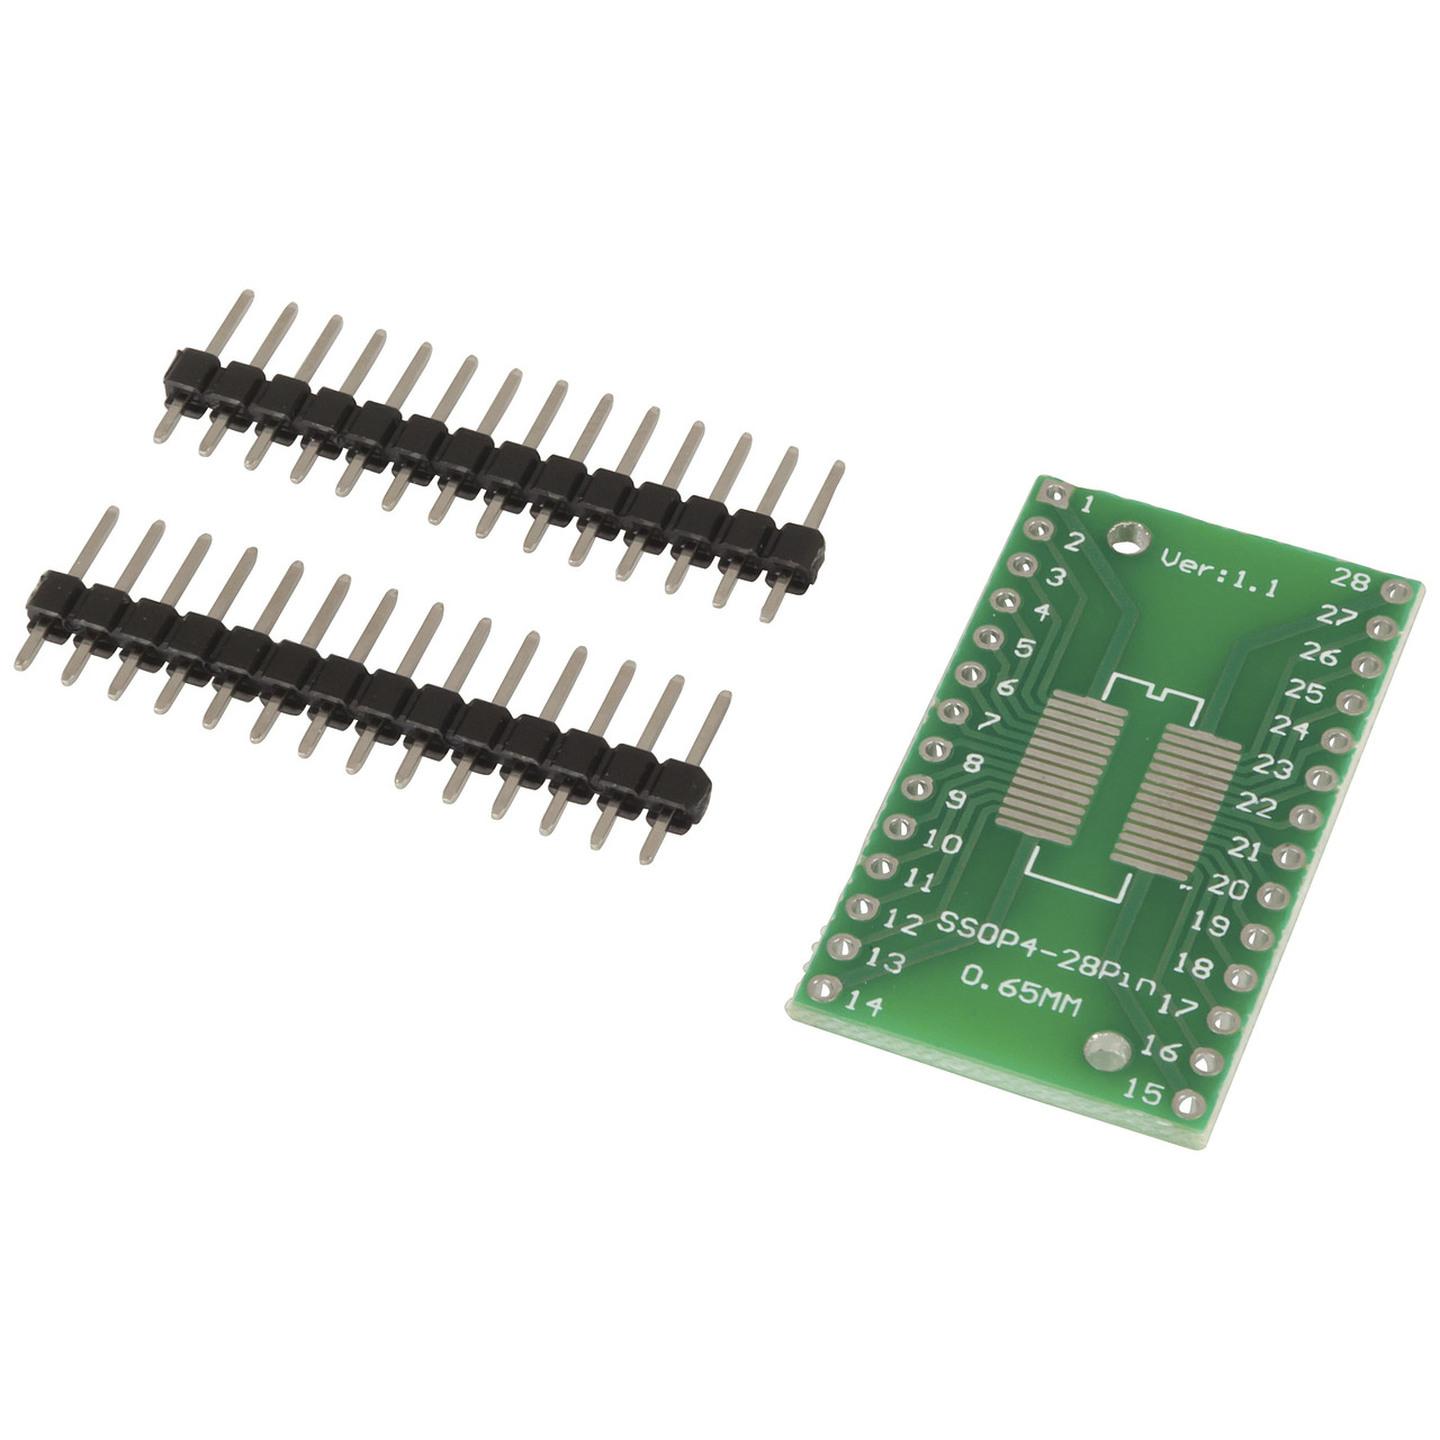 28 pin SOIC/SOP to DIP Breadboard Adaptor